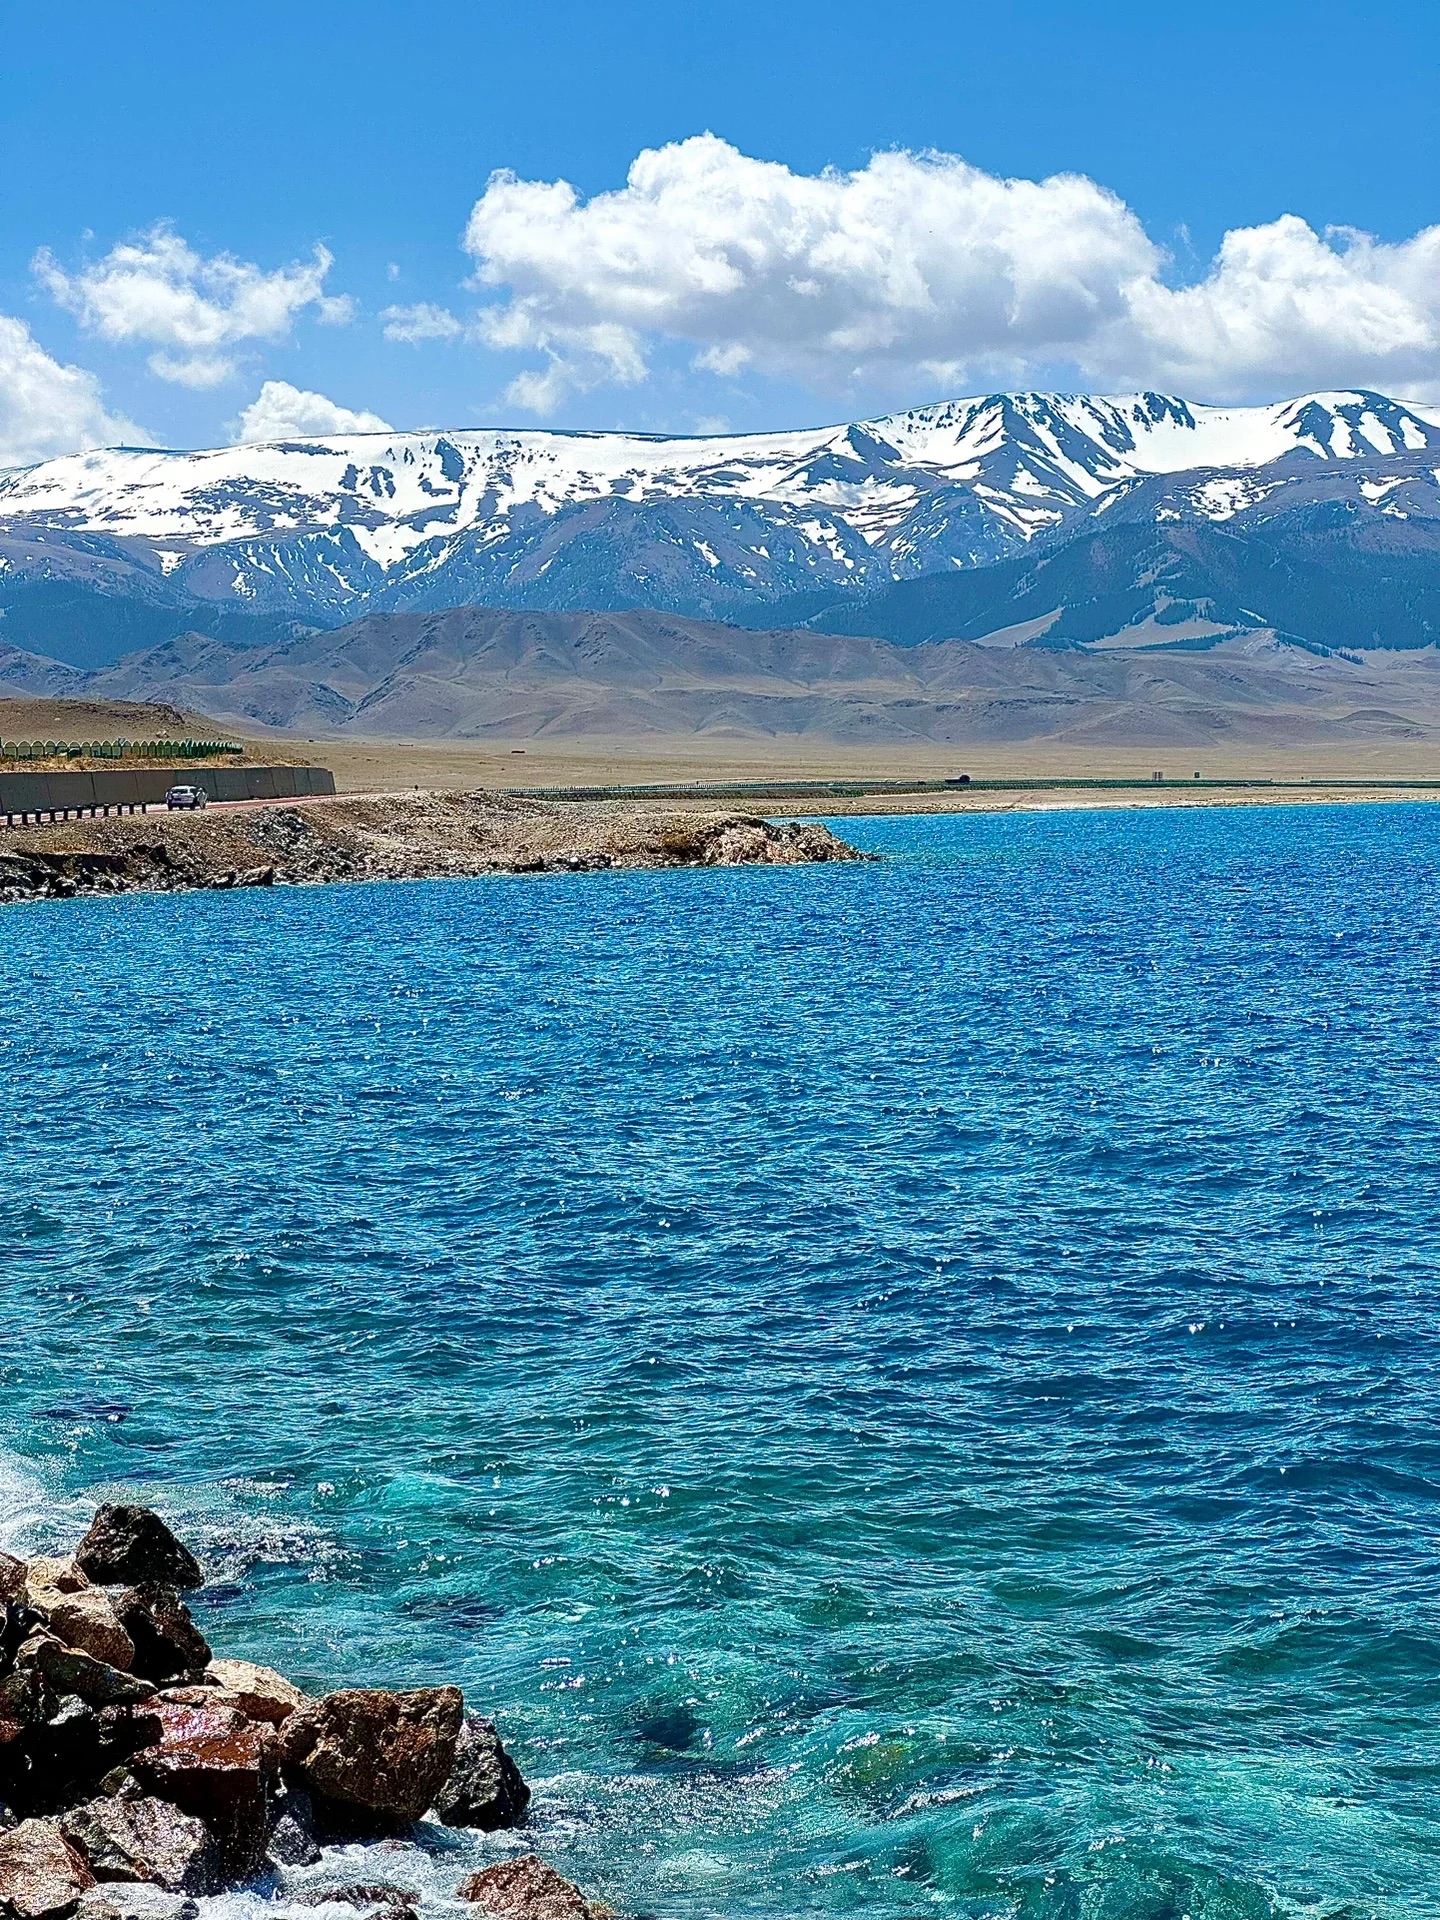 live|快艾特你的旅行搭子今年去新疆吧!攻略我都给你做好了! 五月-七月的赛里木湖堪称最美的时候雪